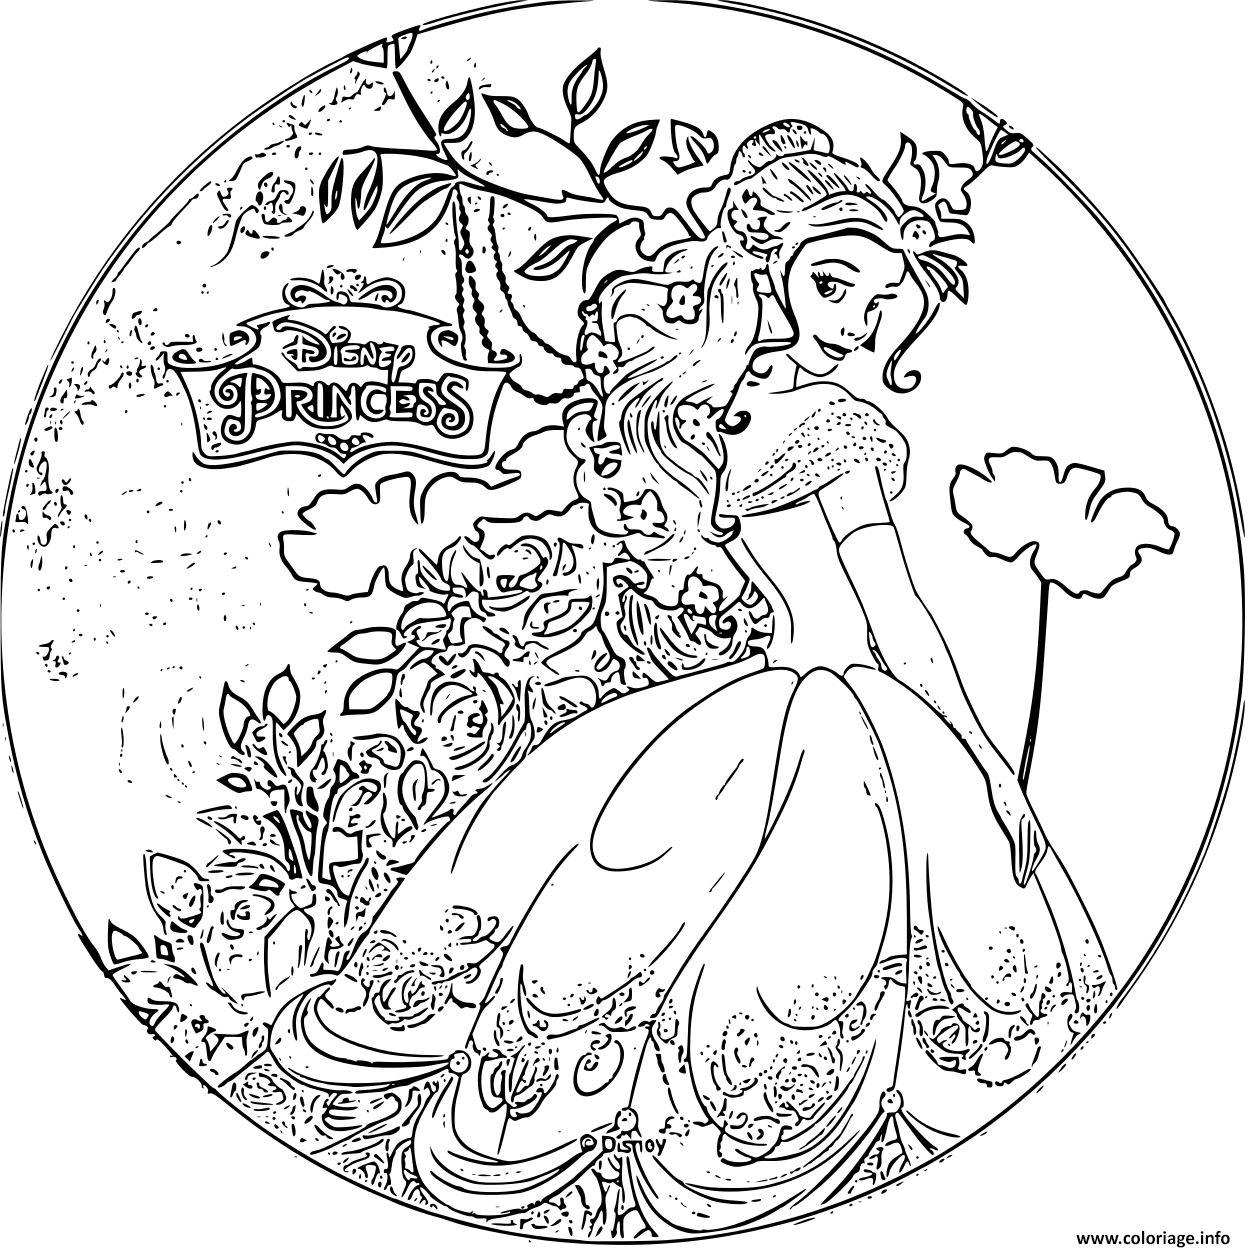 Coloriage disney princesse belle - JeColorie.com